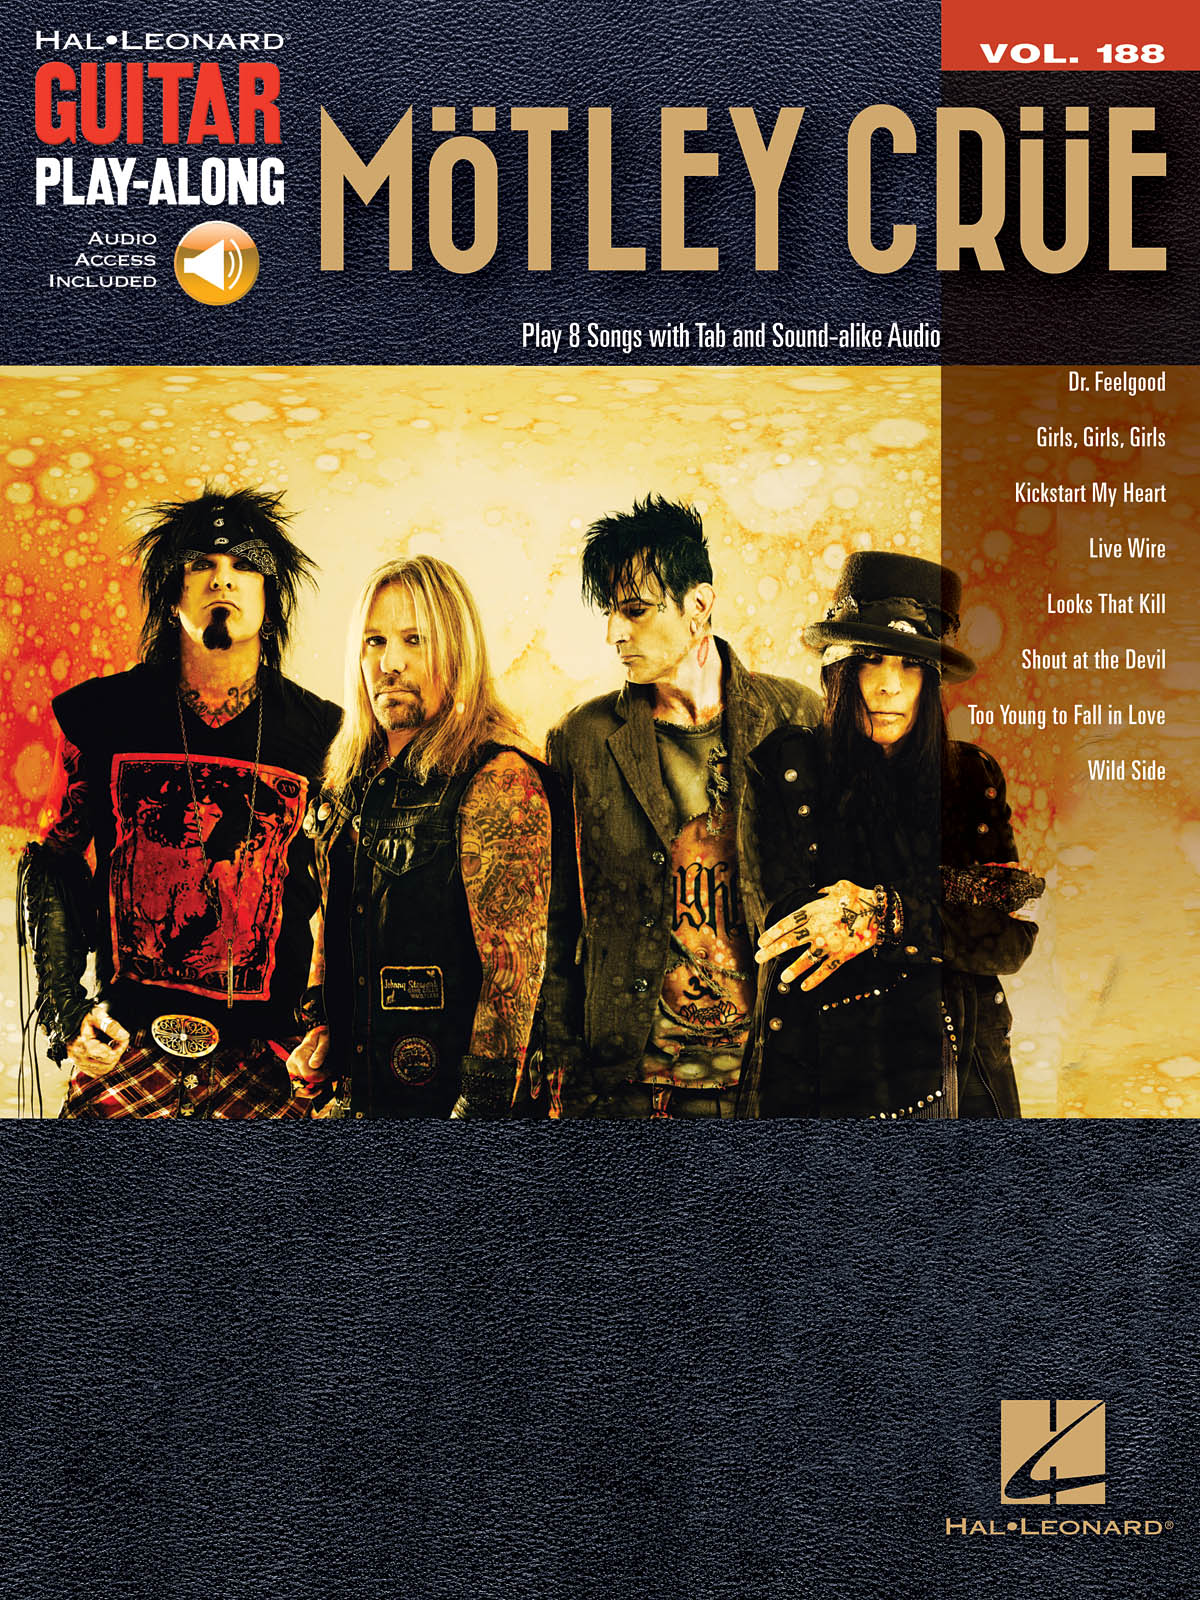 Mötley Crüe - Guitar Play-Along Volume 188